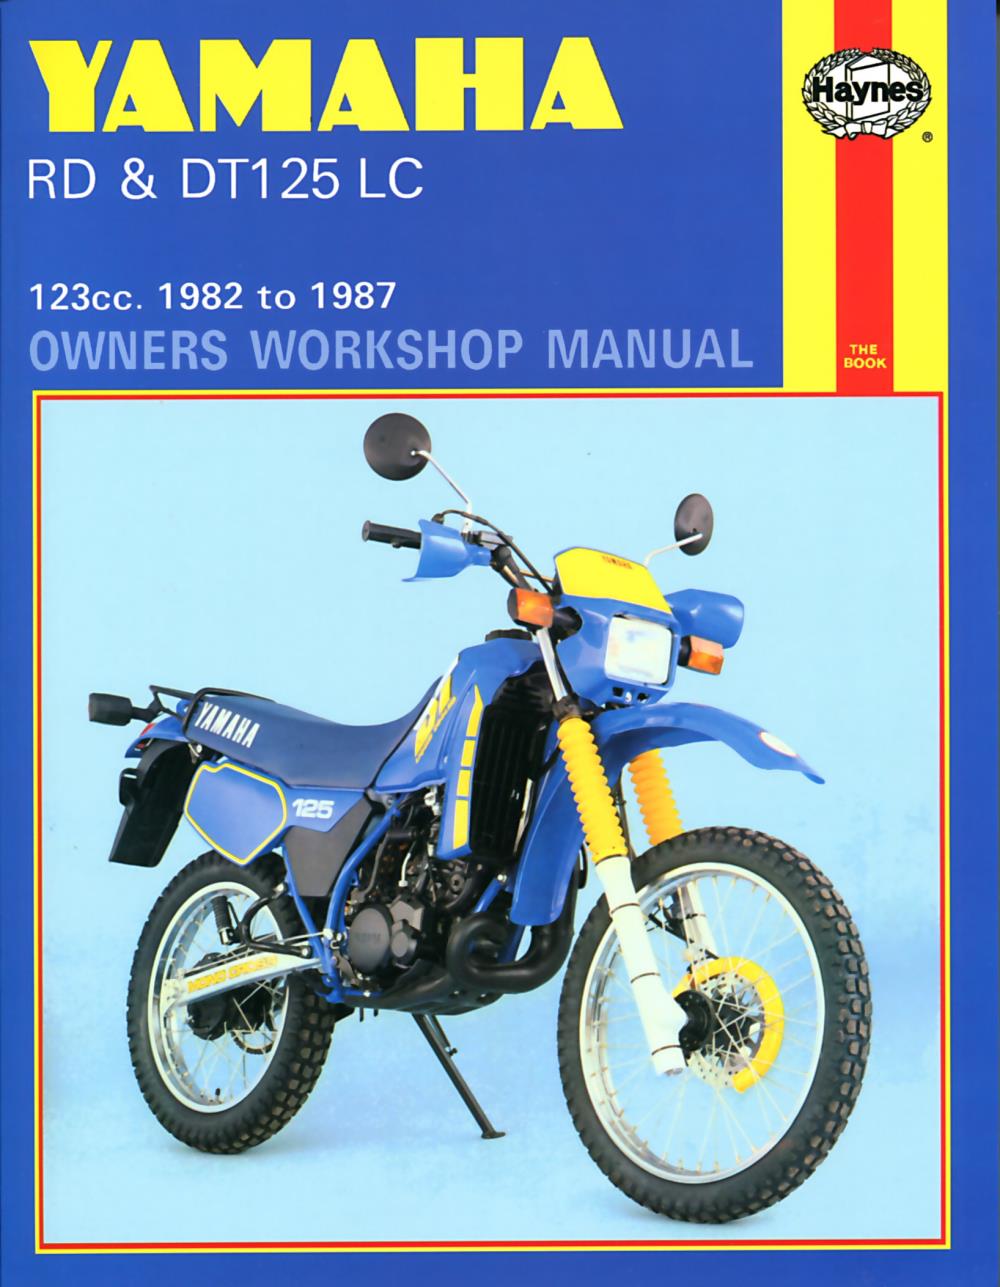 Yamaha 125 manual